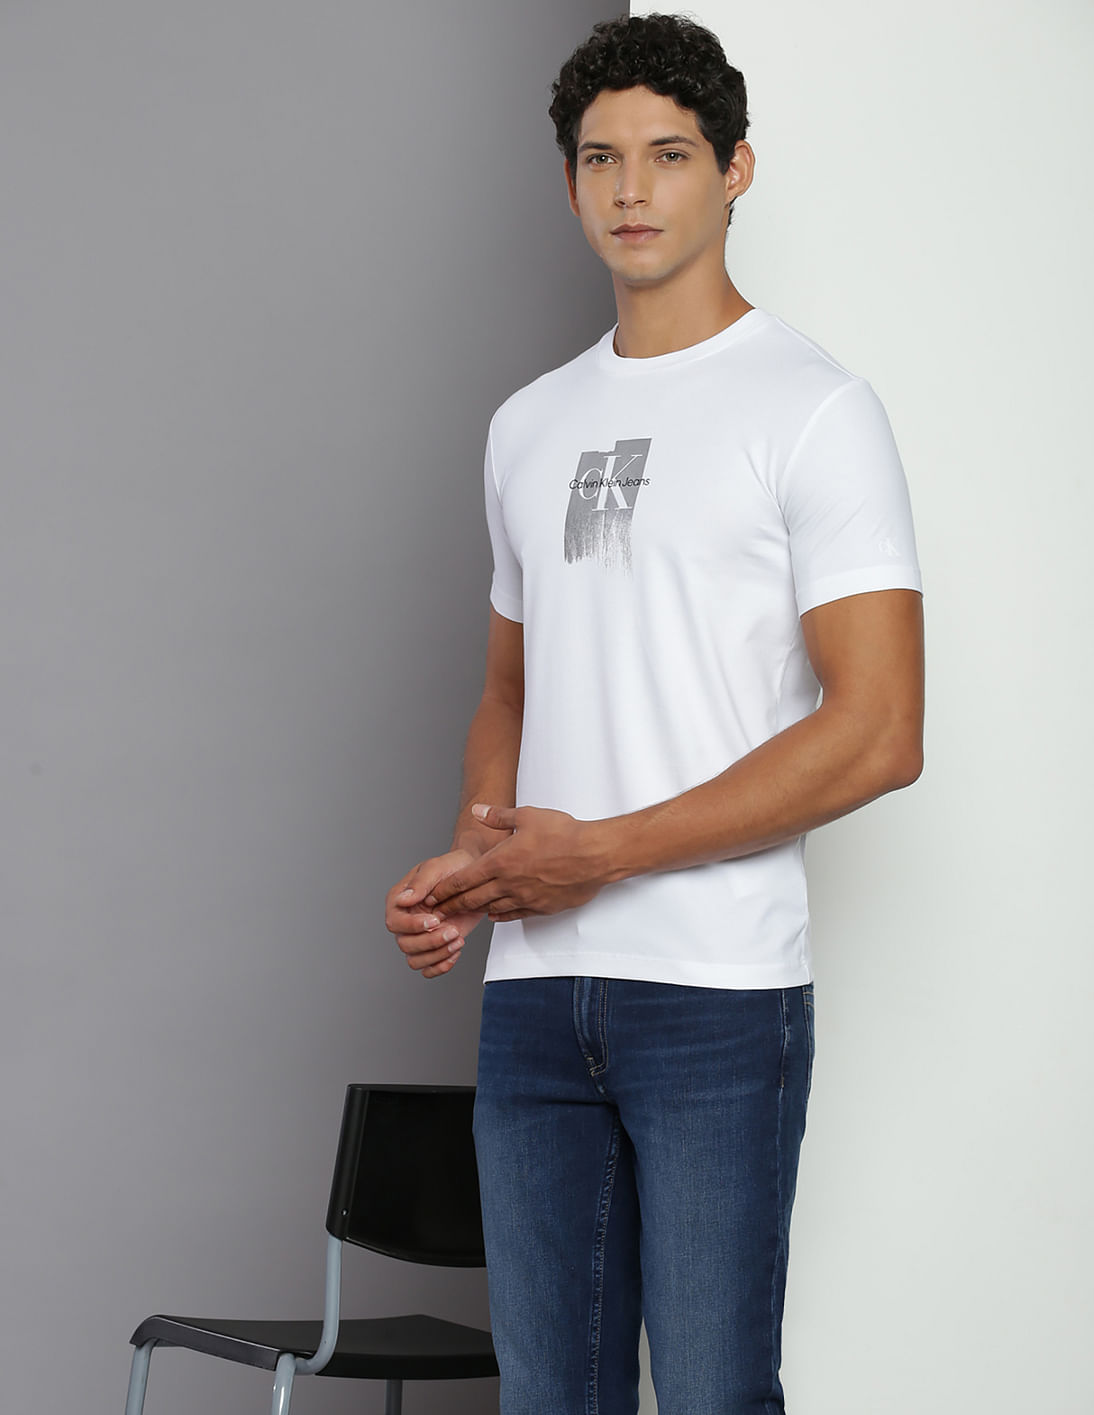 Buy Calvin Klein Flock Monogram Slim Fit T-Shirt - NNNOW.com